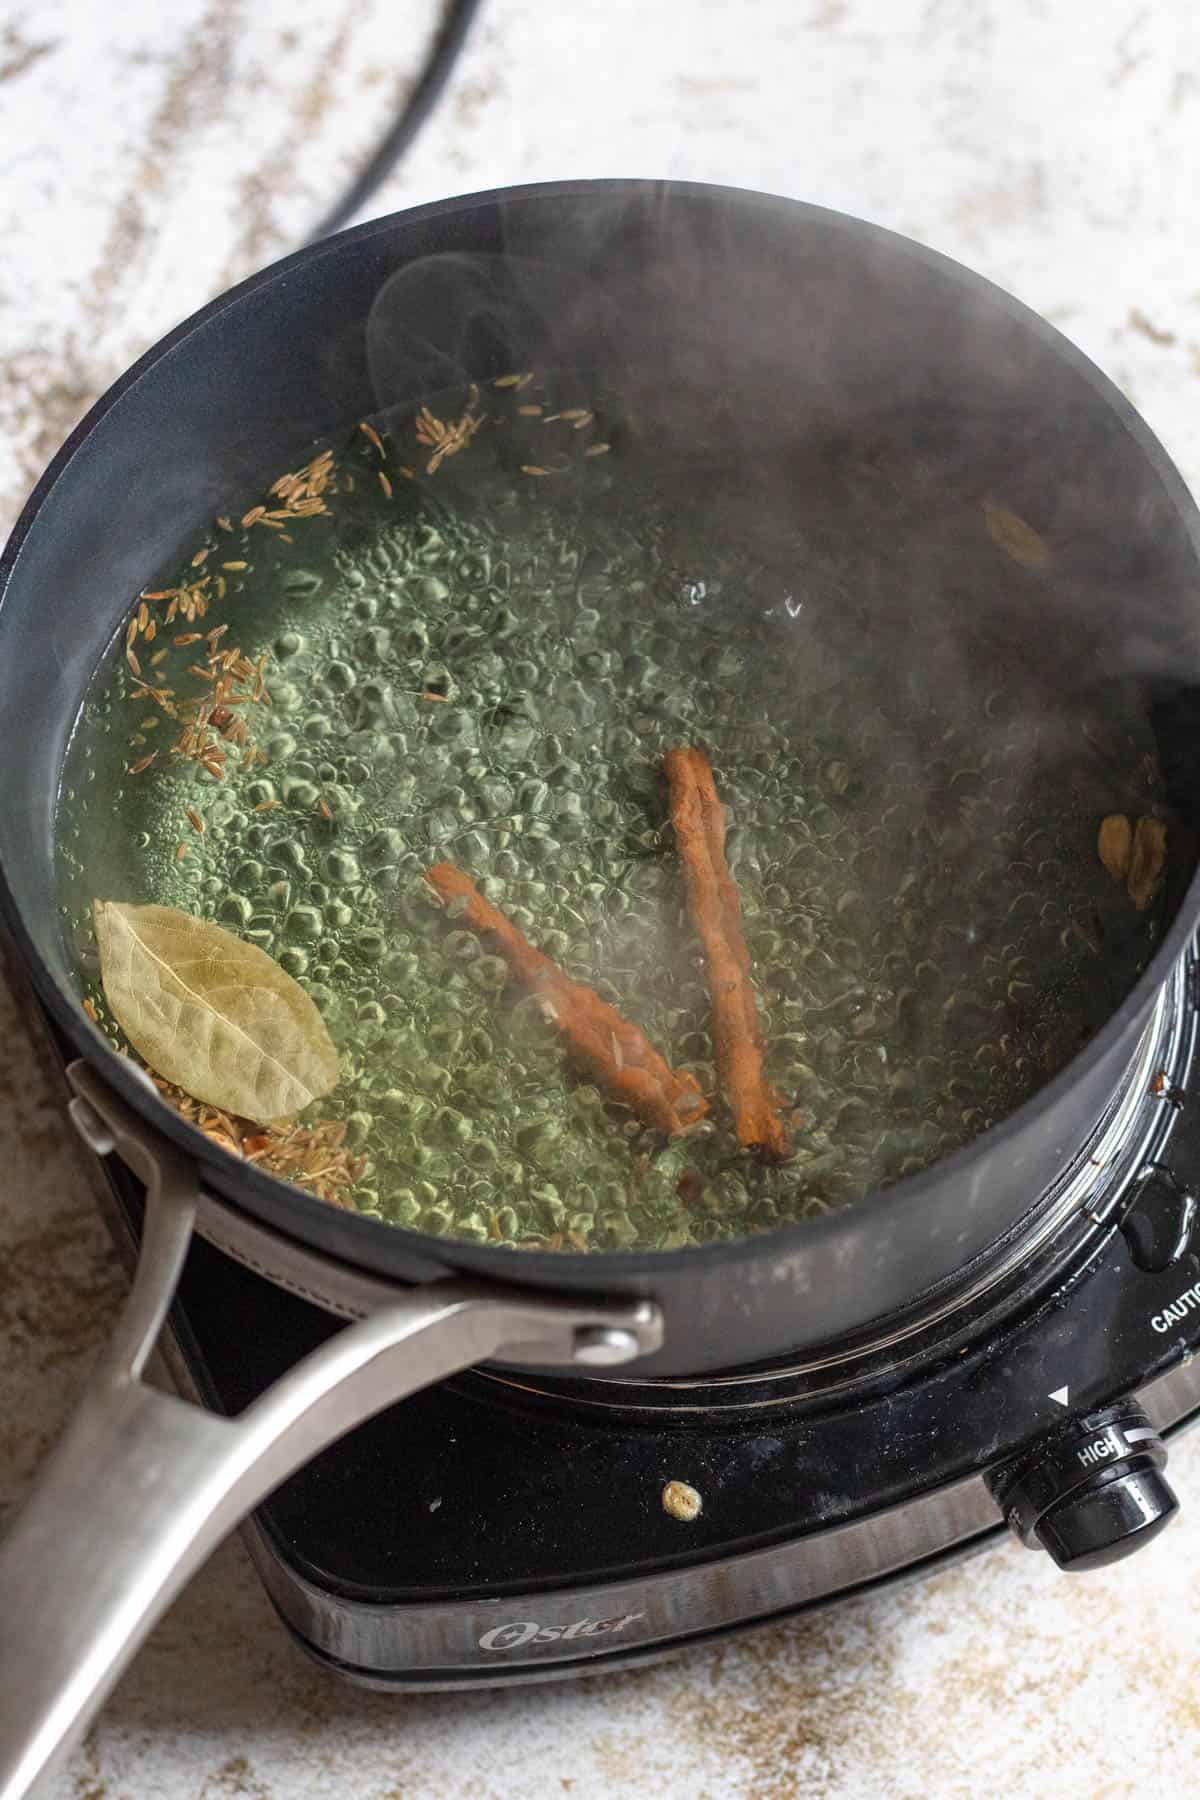 Boiling water with cinnamon sticks and seasonings to start preparing egg biryani. 